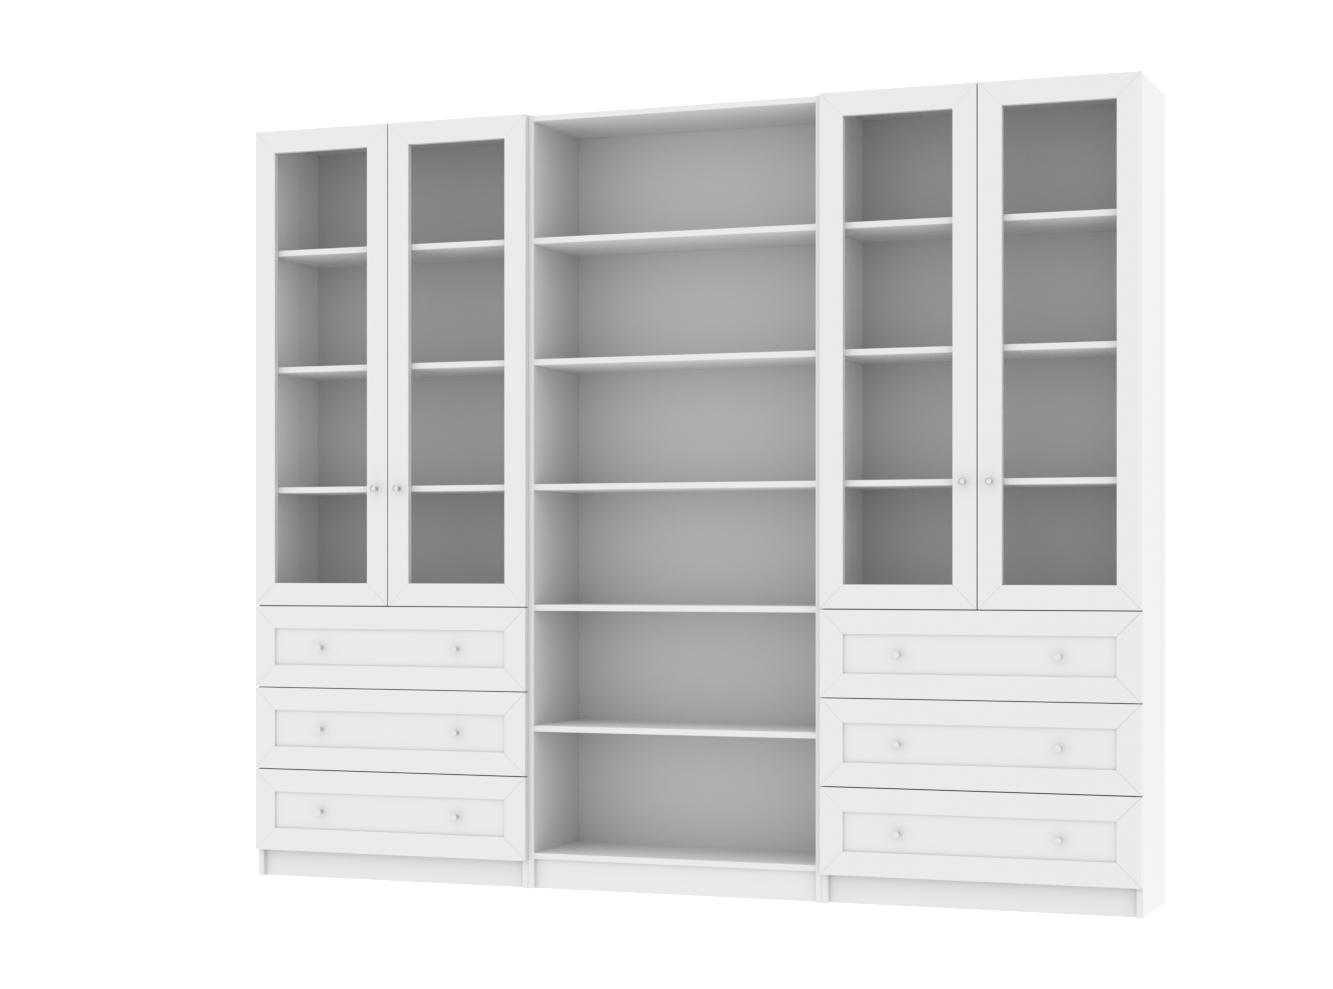  Книжный шкаф Билли 369 white ИКЕА (IKEA) изображение товара